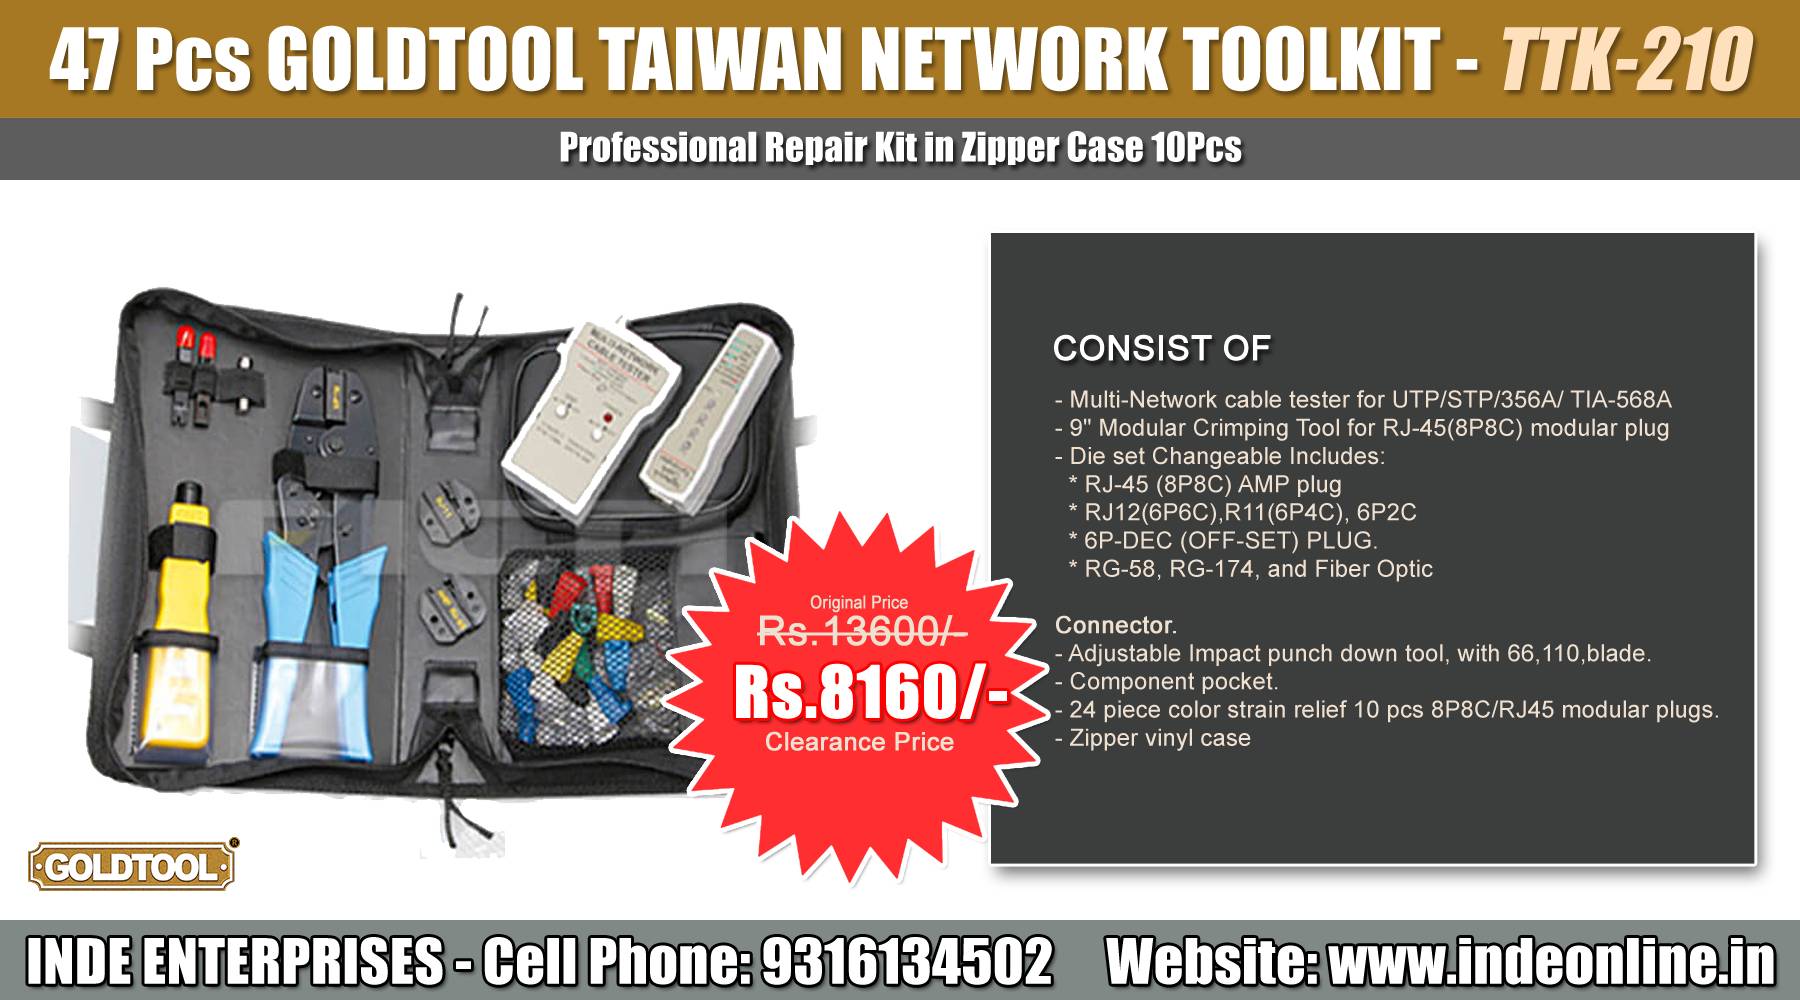 47 Pcs Goldtool Taiwan Network Toolkit Price Rs.8160/-